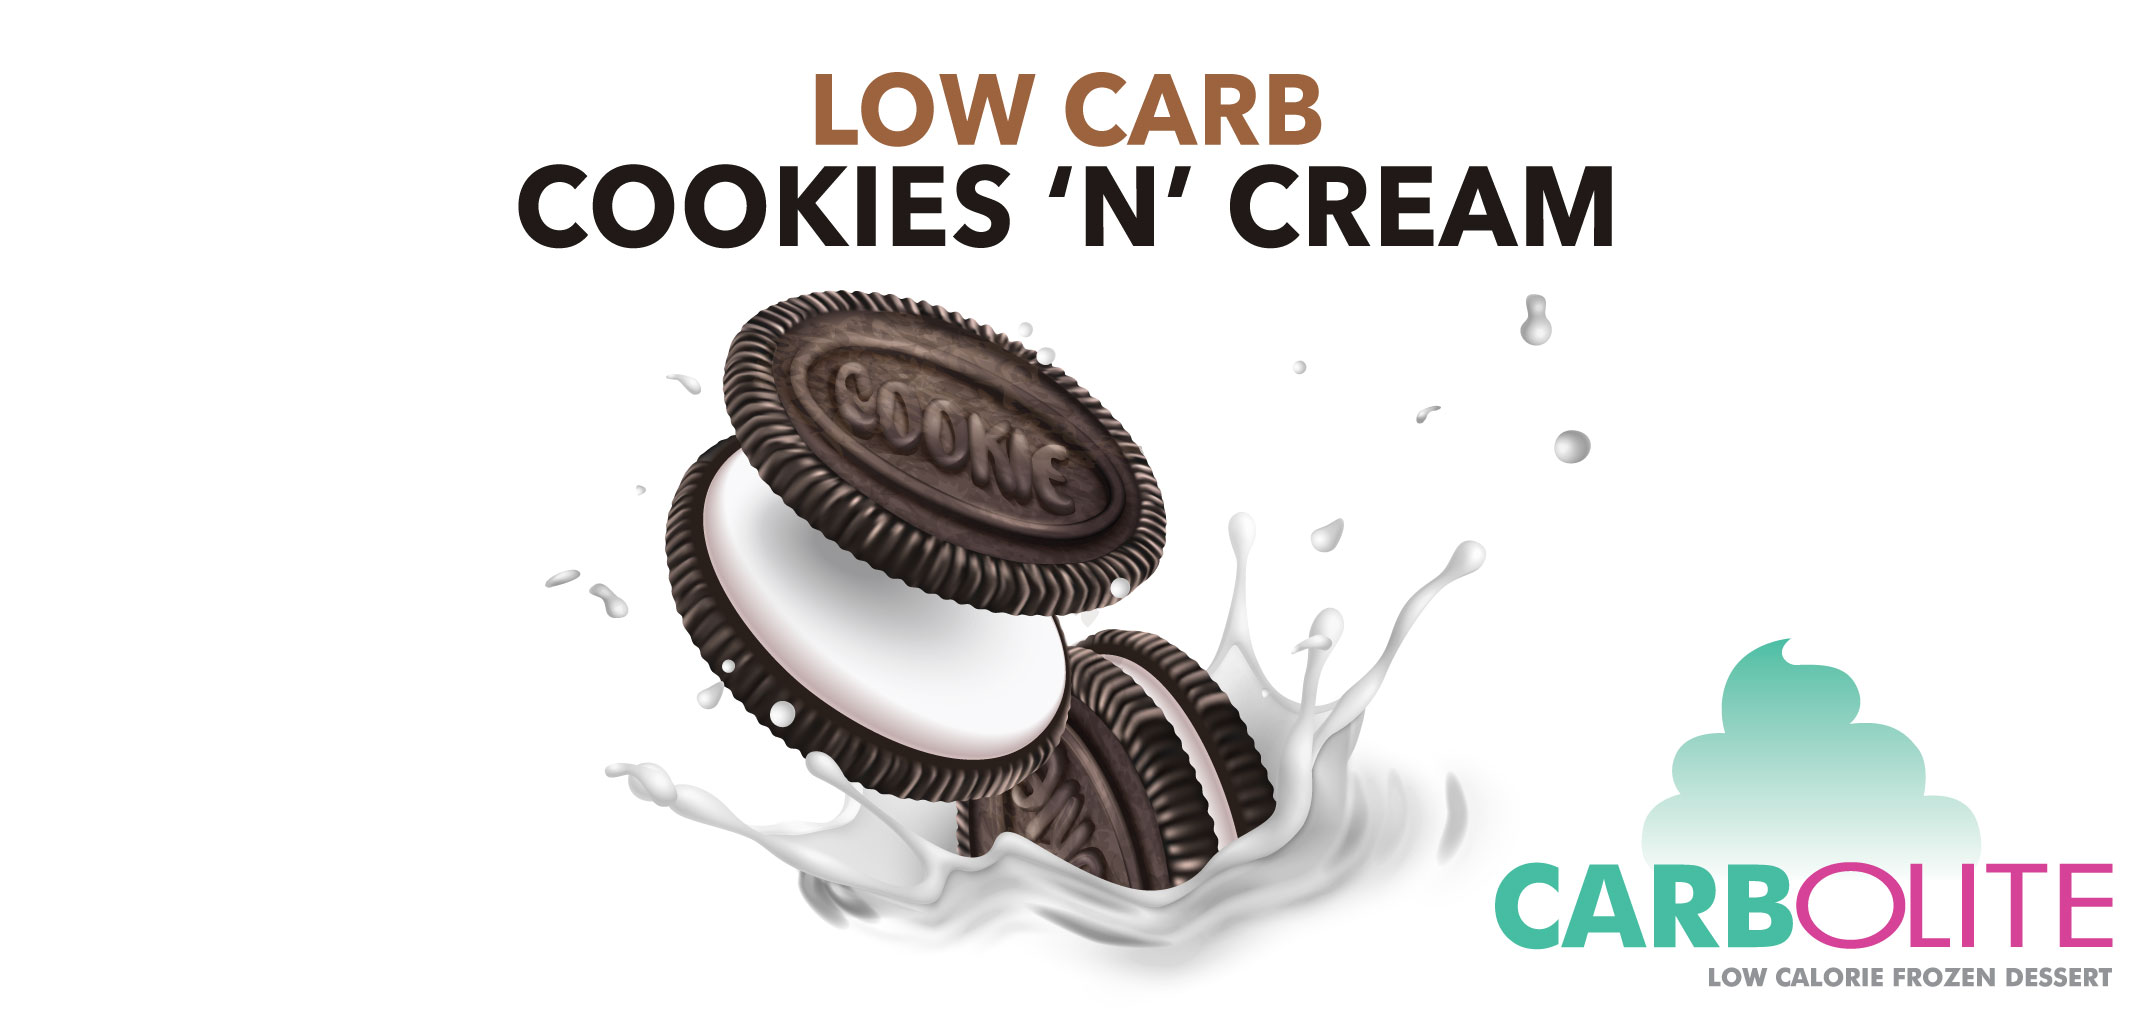 carbolite low carb no sugar added cookies 'n' cream label image